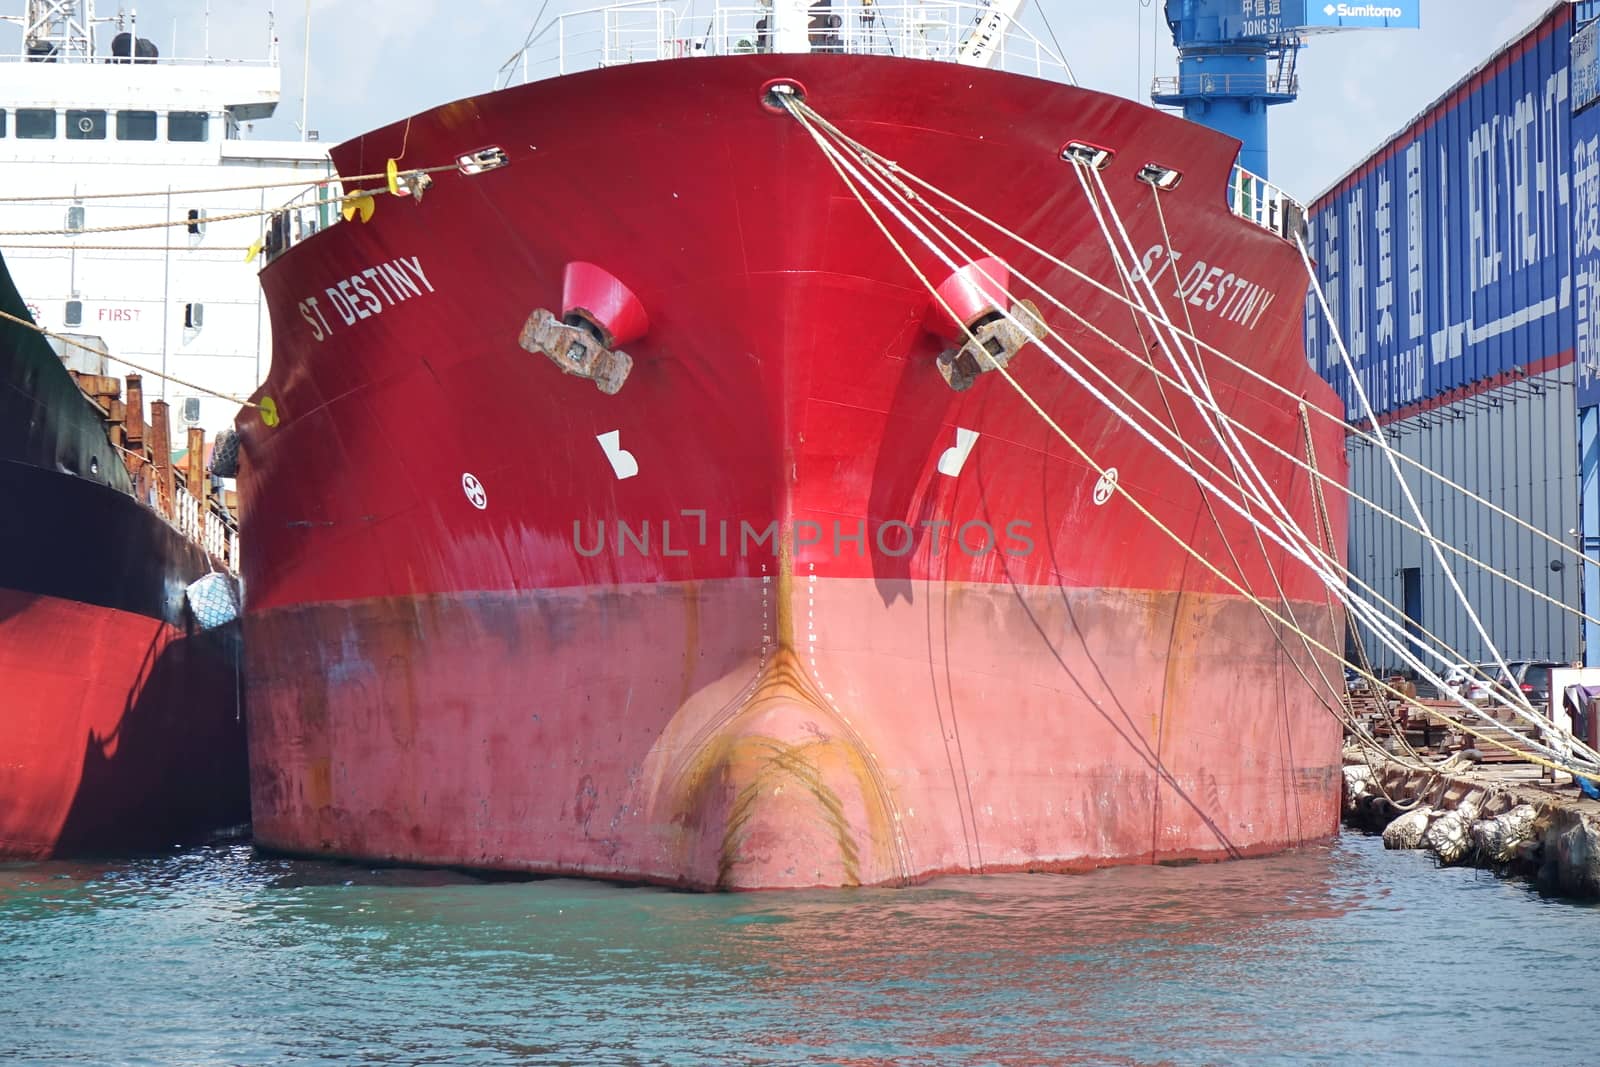 Large Vessel in a Shipyard in Taiwan by shiyali